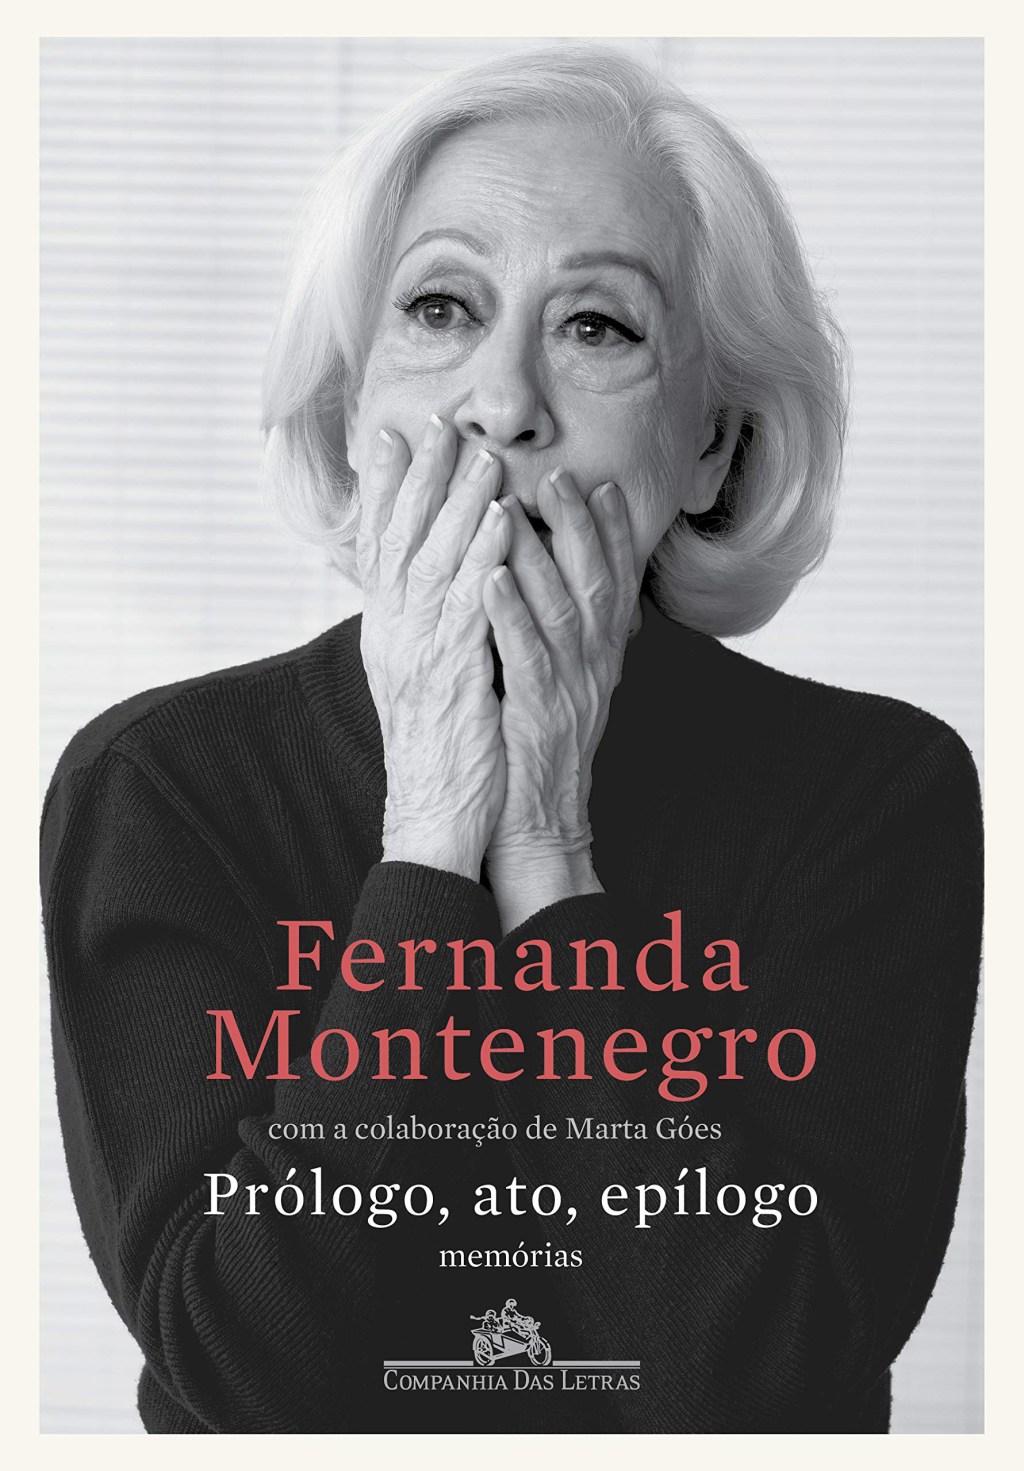 Livro de Fernanda Montenegro